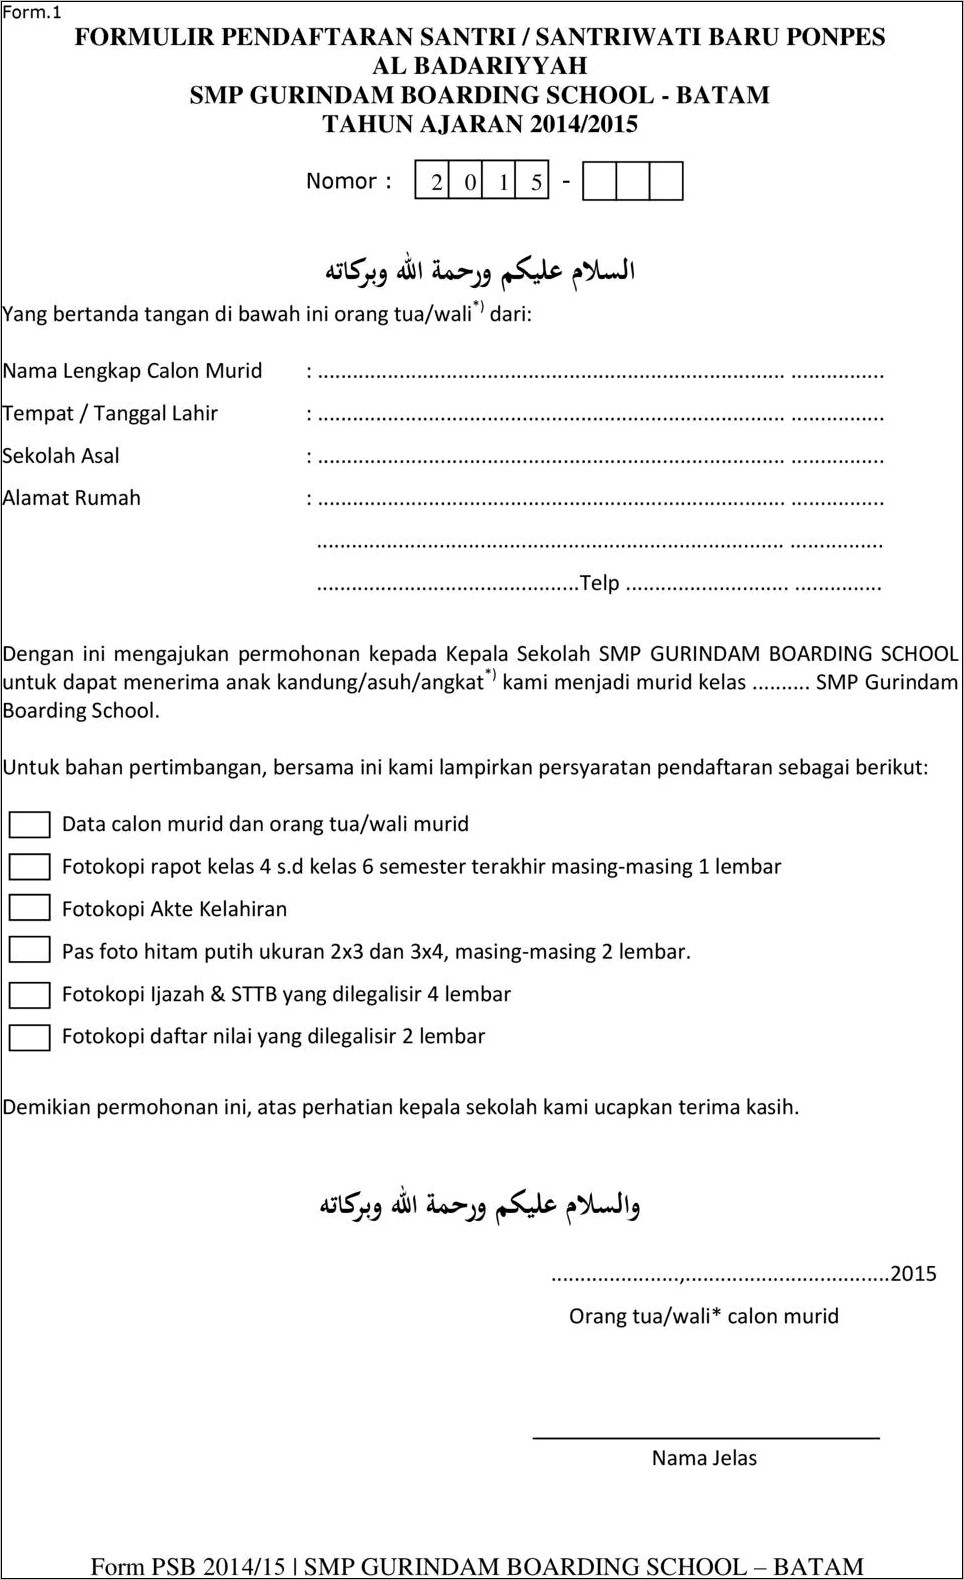 Contoh Formulir Surat Pernyataan Calon Orang Tua Angkat.doc